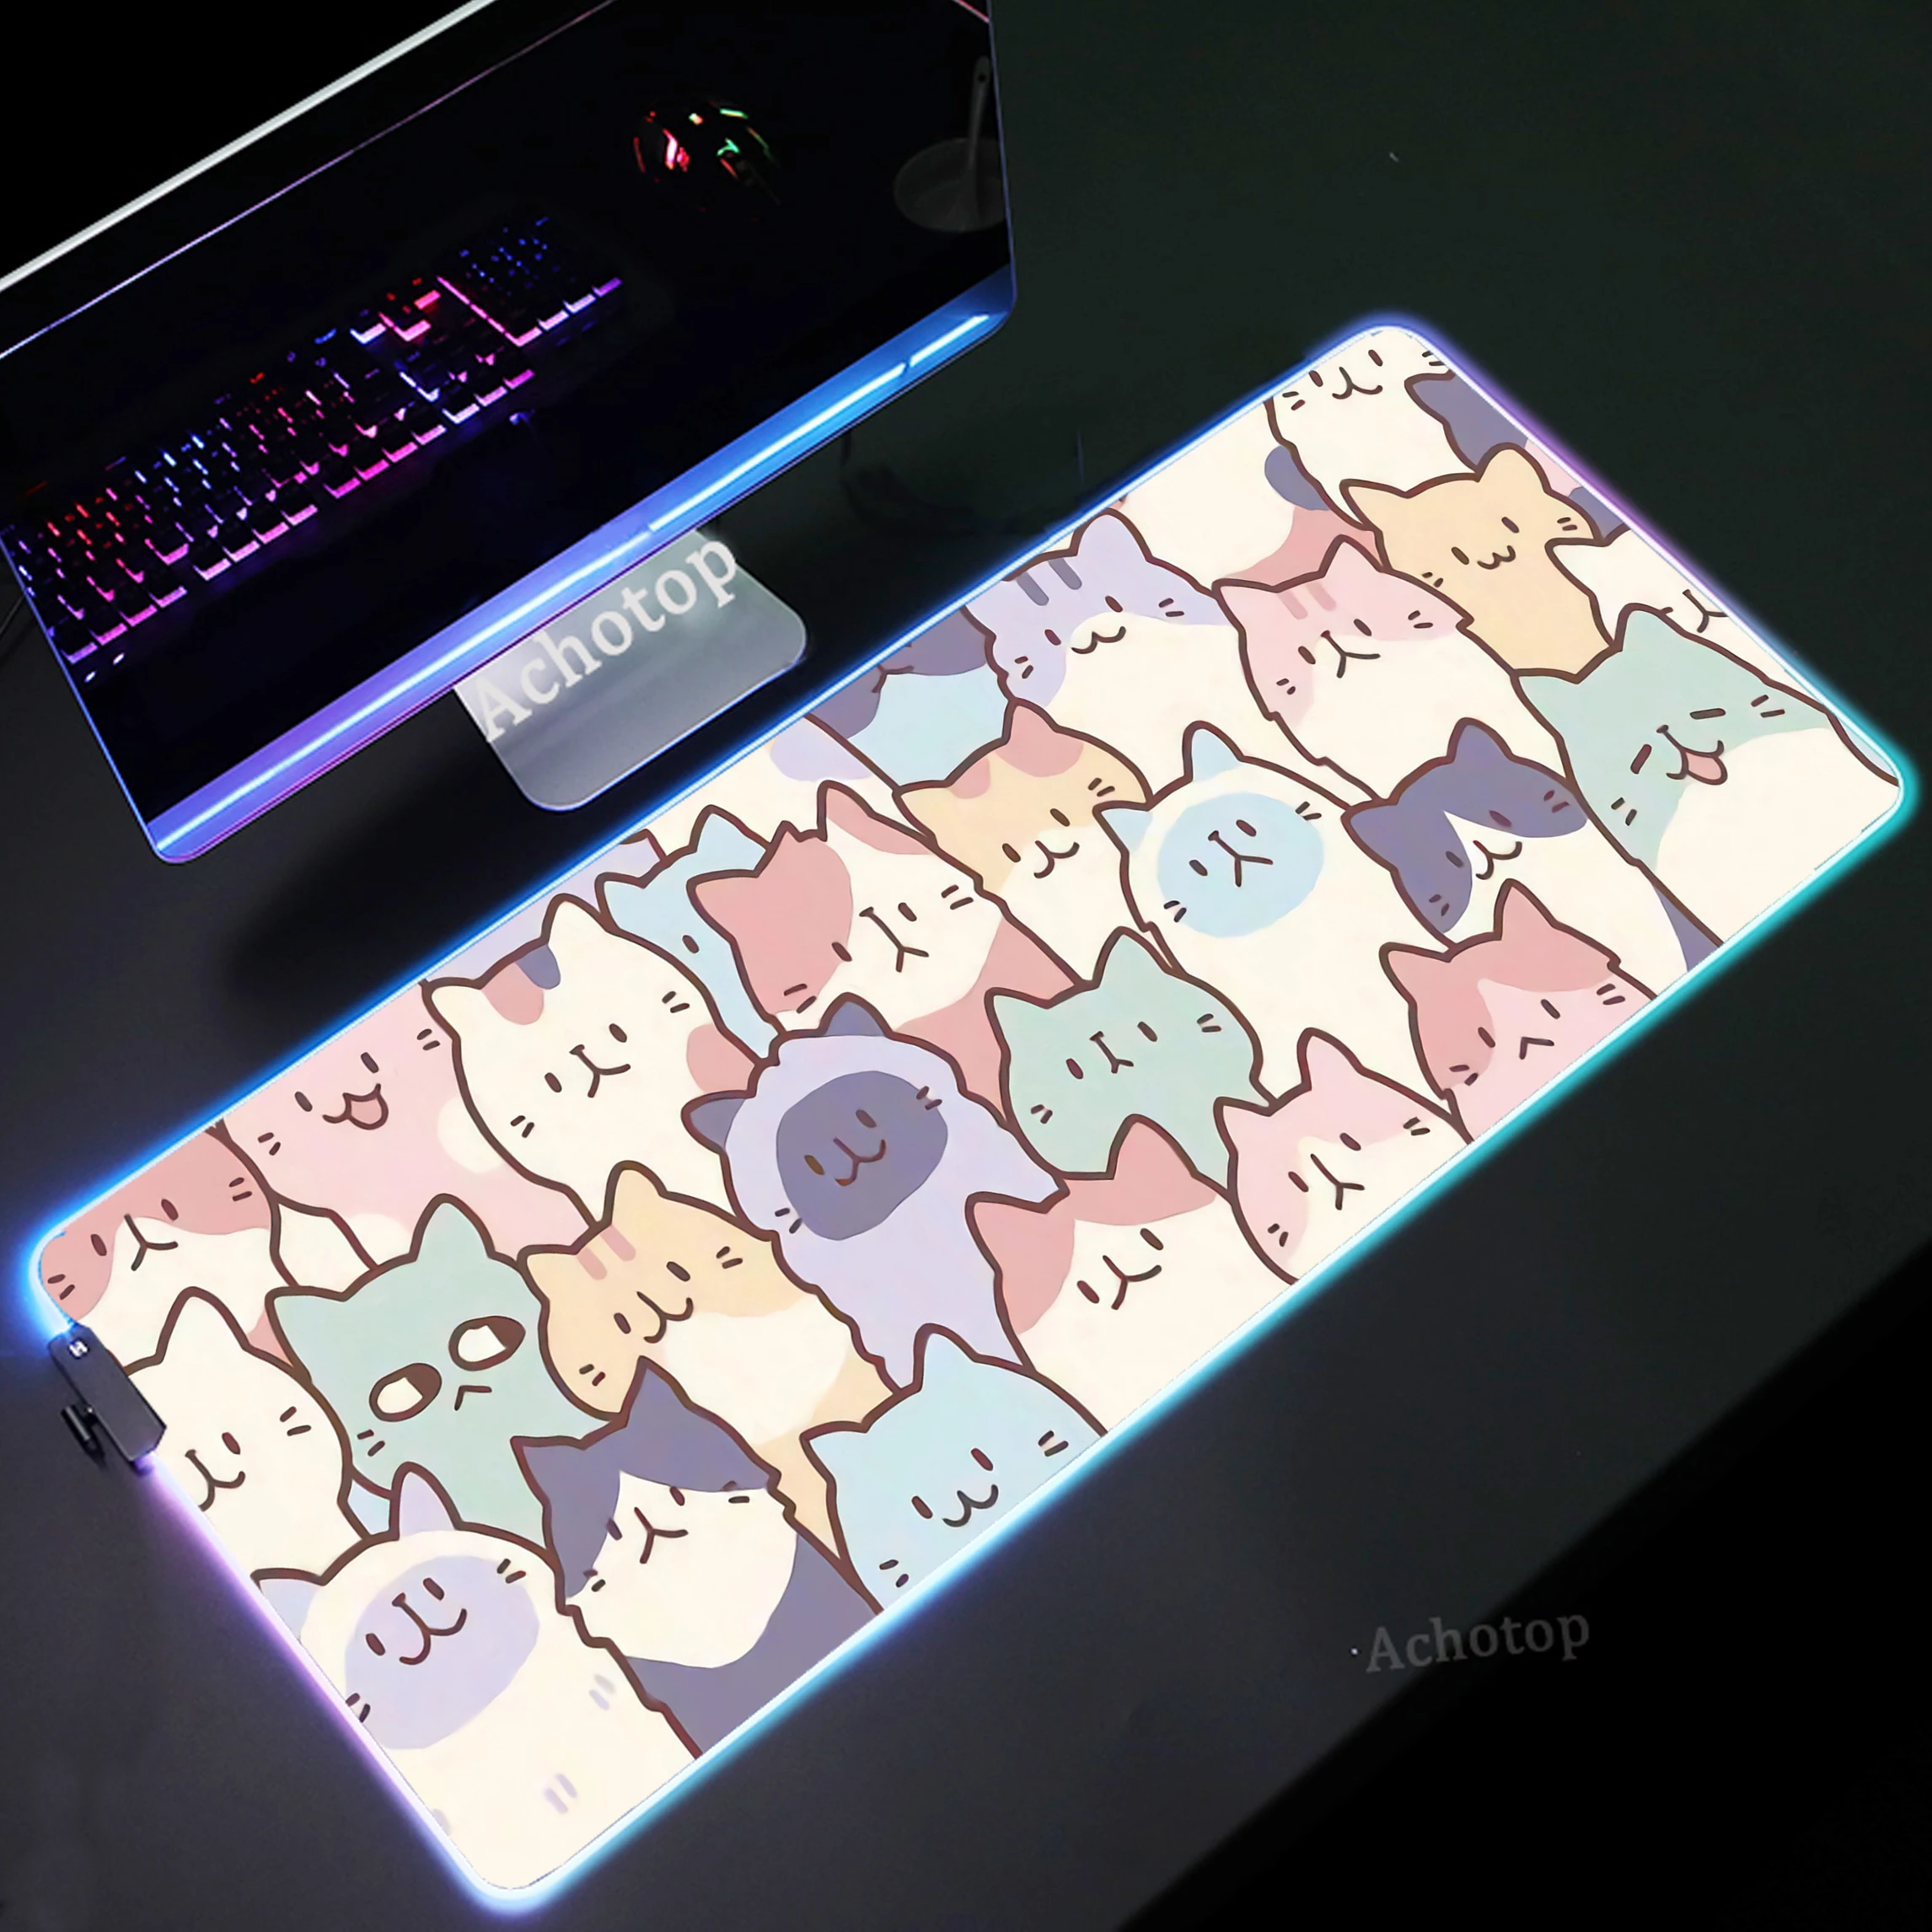 Mačka Podložka pod Myš Herné RGB Mousepad Veľké Rýchlosť Myši, Podložky, PC Gamer Gumy Mousemat LED Podsvietenie Hra Deskmat XXL 900x400mm